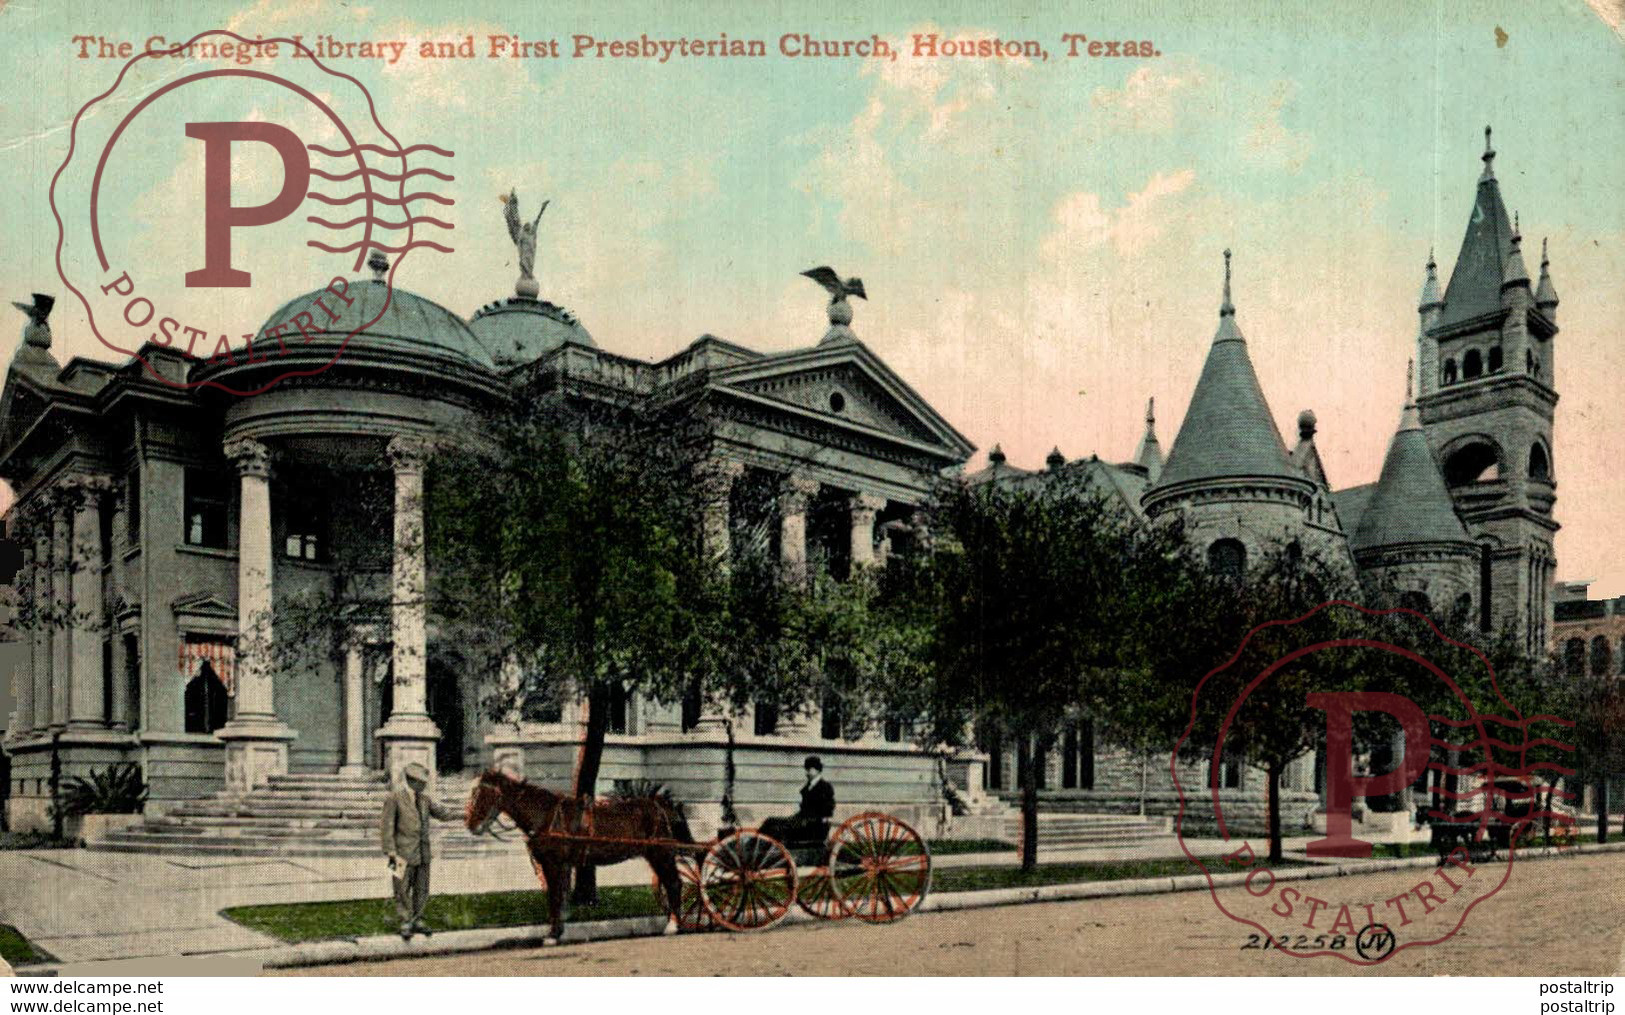 EEUU // USA. THE CARNEGIE LIBRARY AND FIRST PRESBYTERIAN CHURCH, HOUSTON, TEXAS - Houston